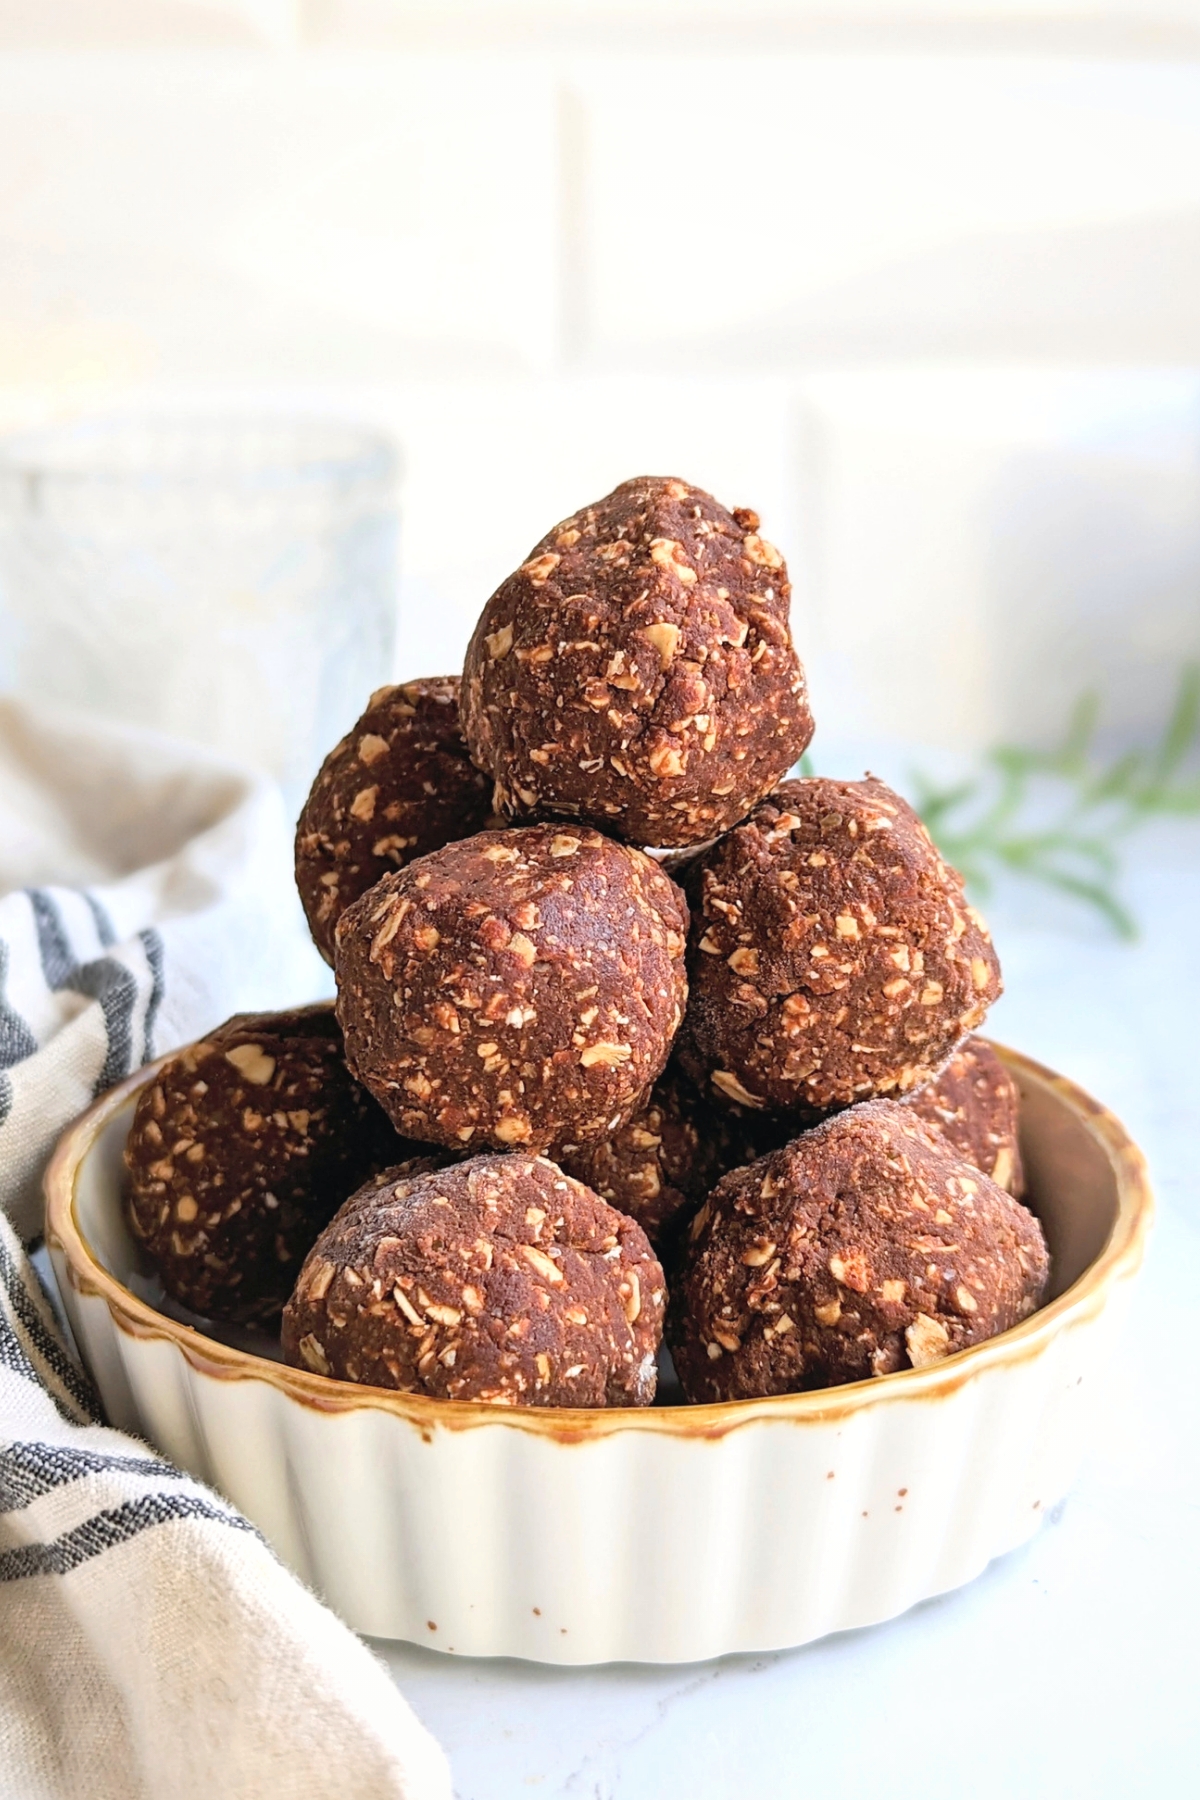 cocoa oat balls with cacao powder dessert recipes oatmeal bites vegan gluten free healthy desserts no bake